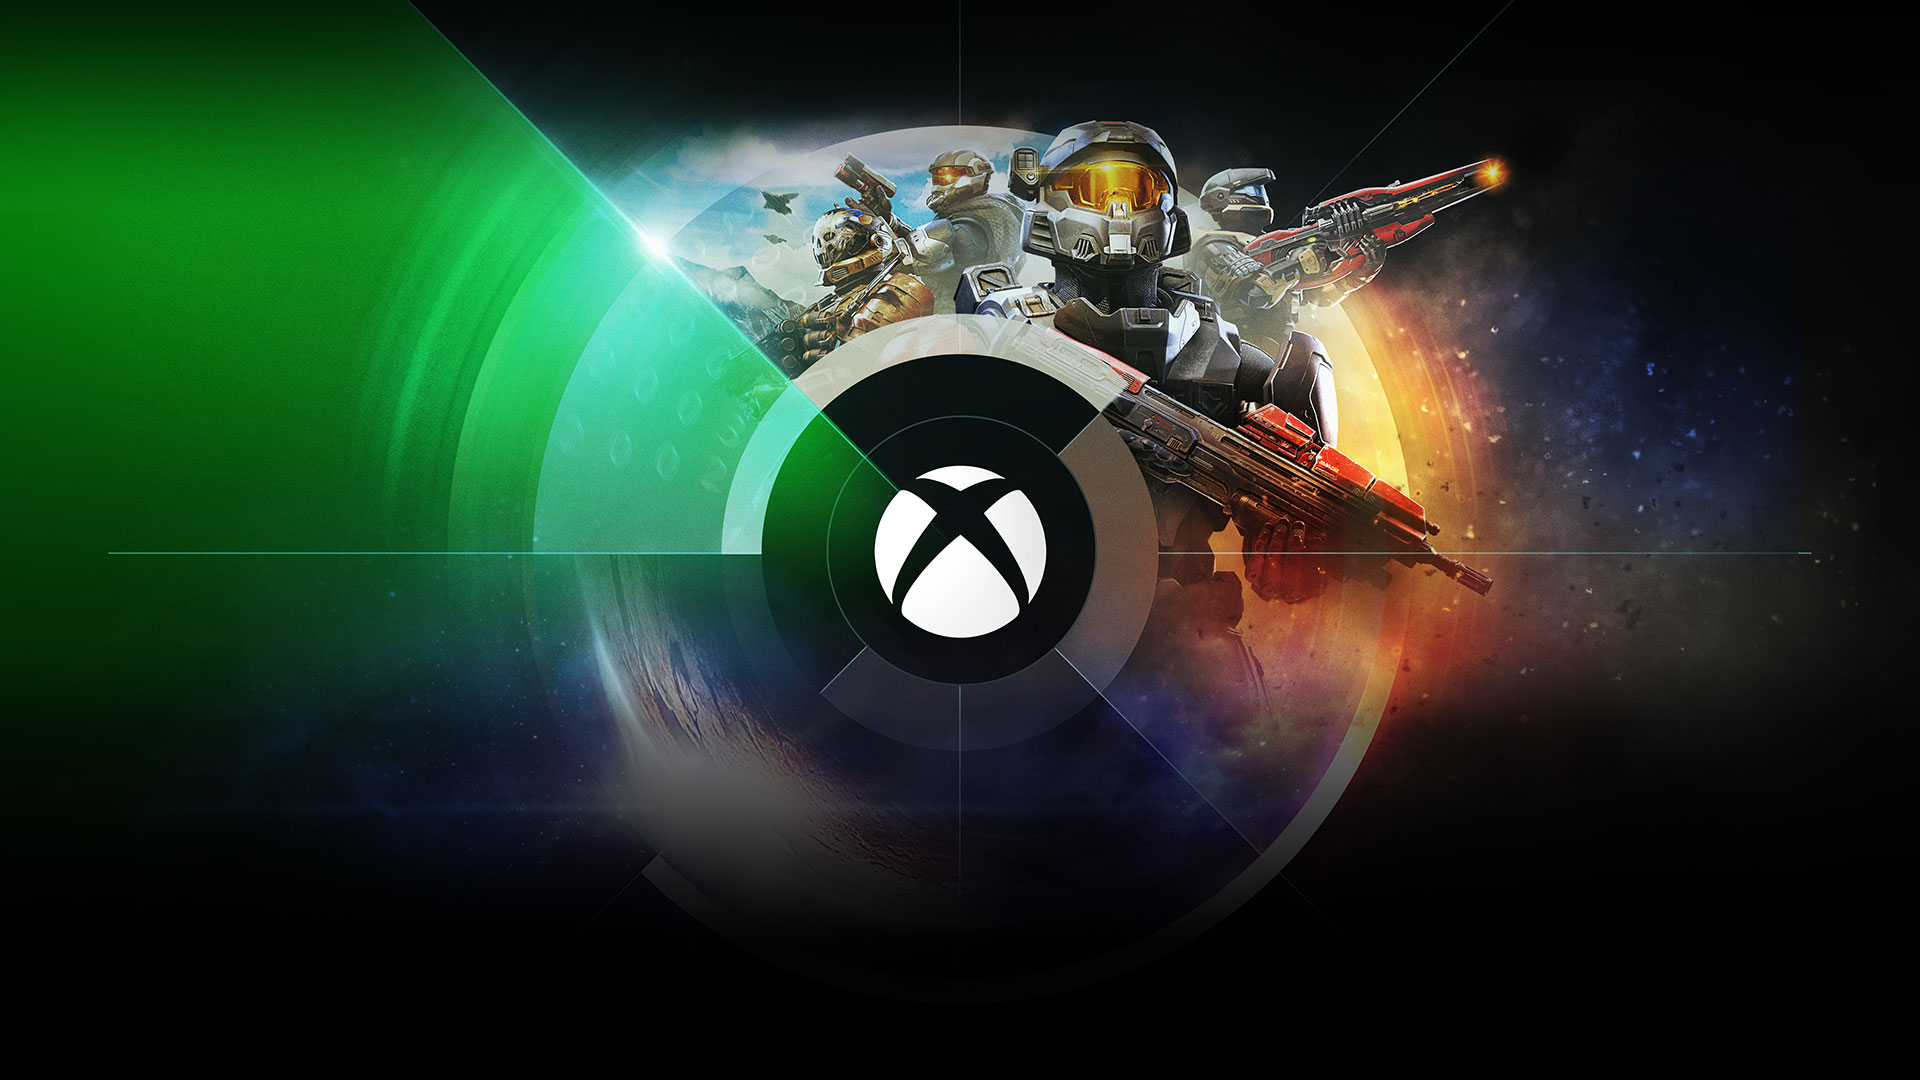 Xbox HD Wallpaper